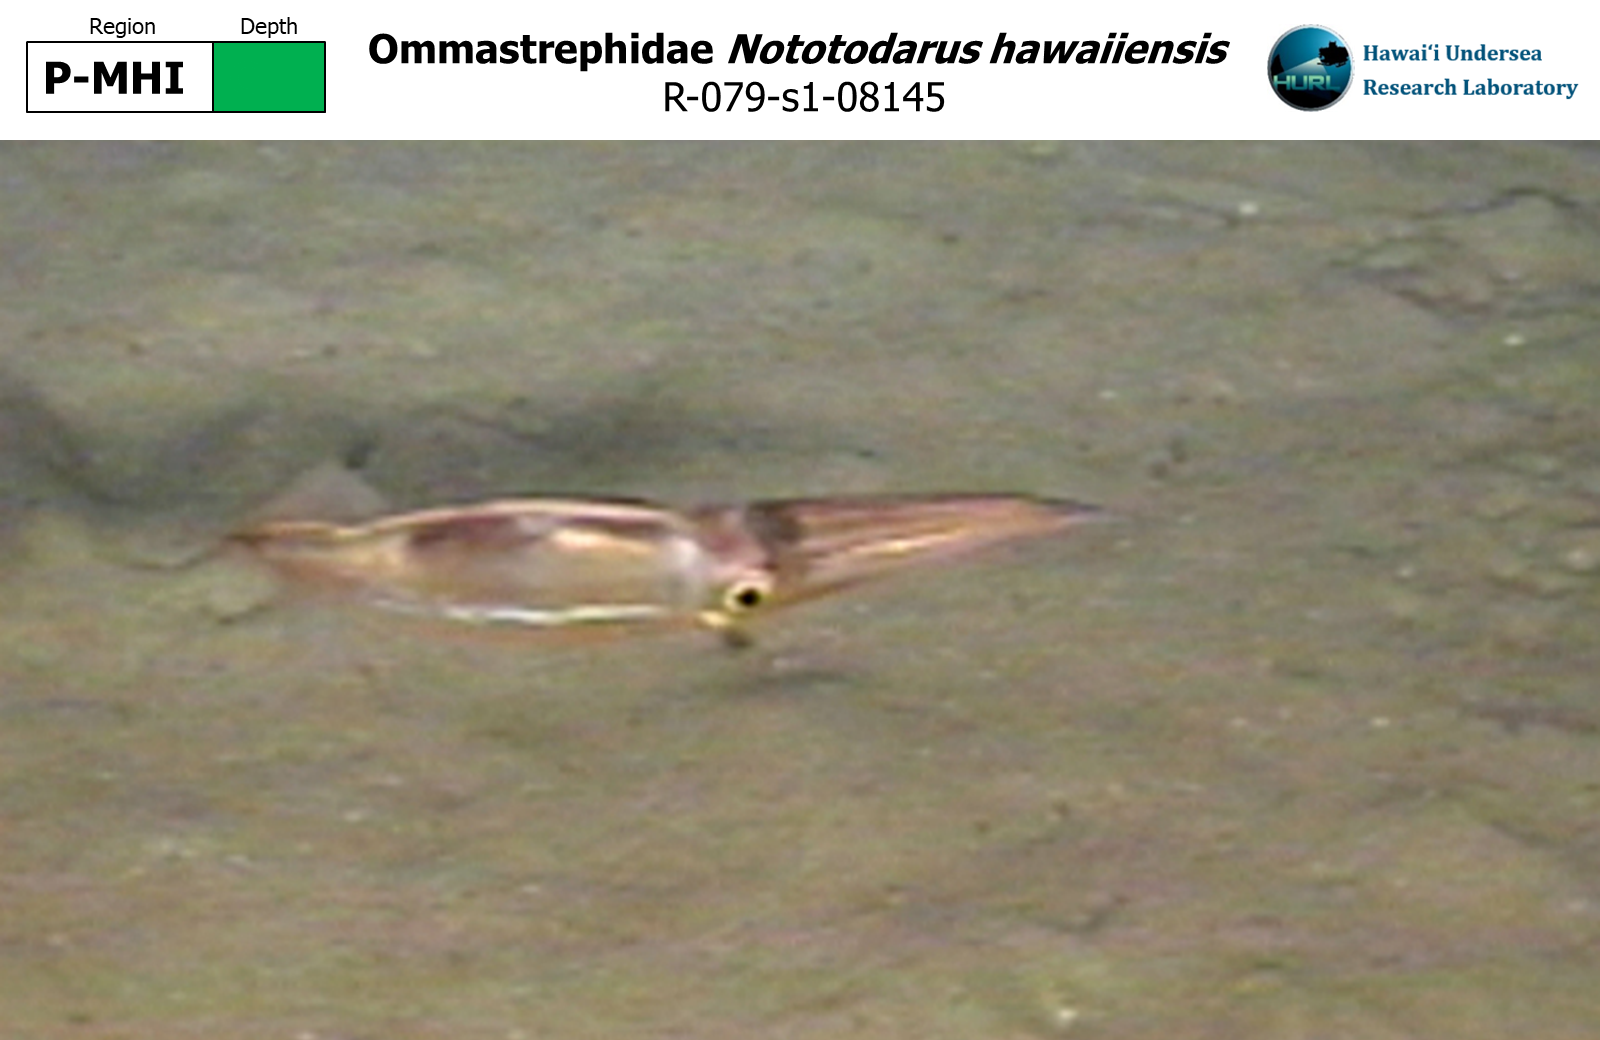 Nototodarus hawaiiensis